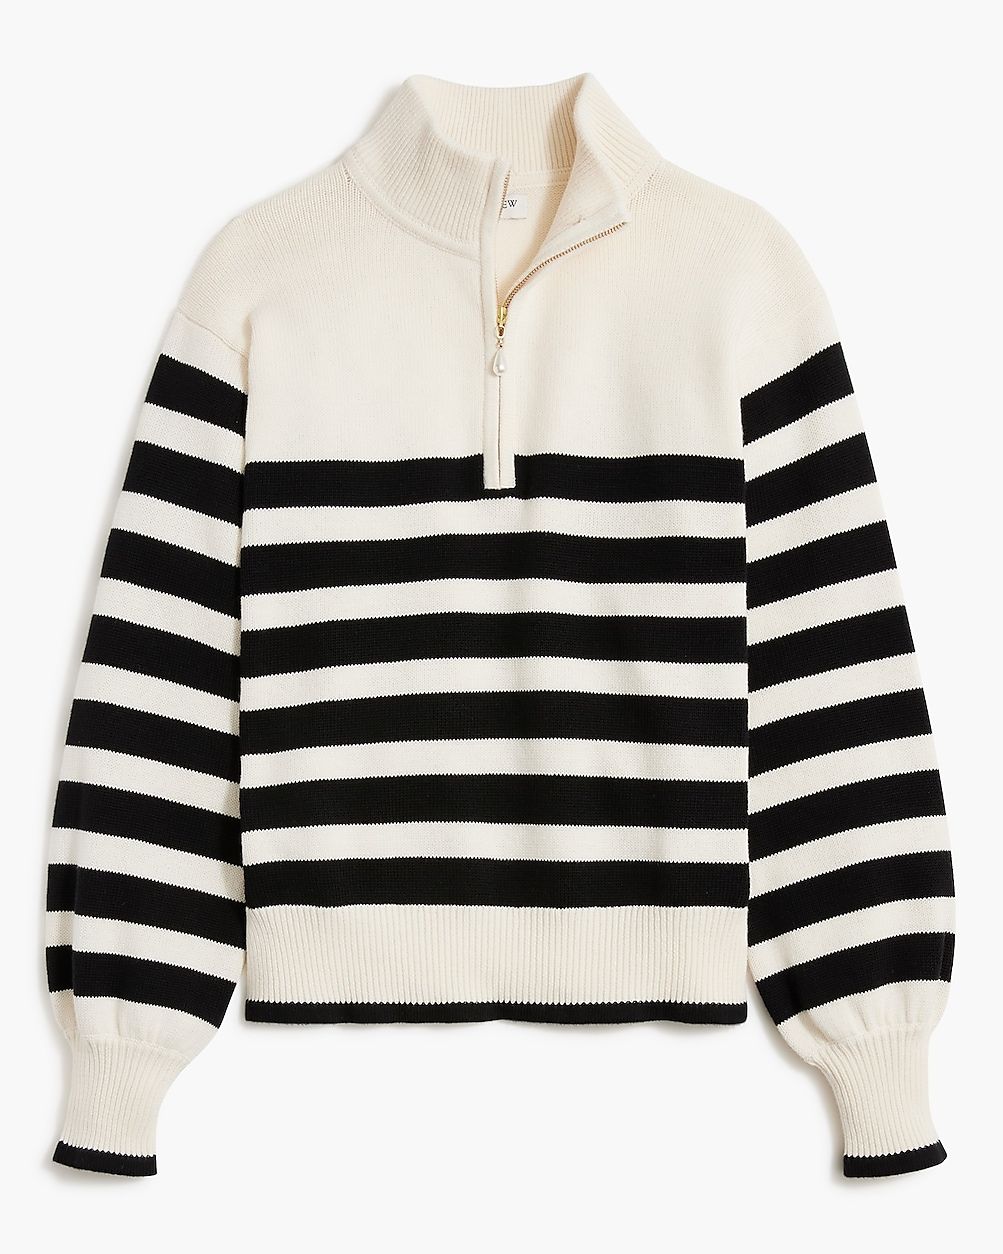 Striped half-zip sweater with pearl zipper | J.Crew Factory